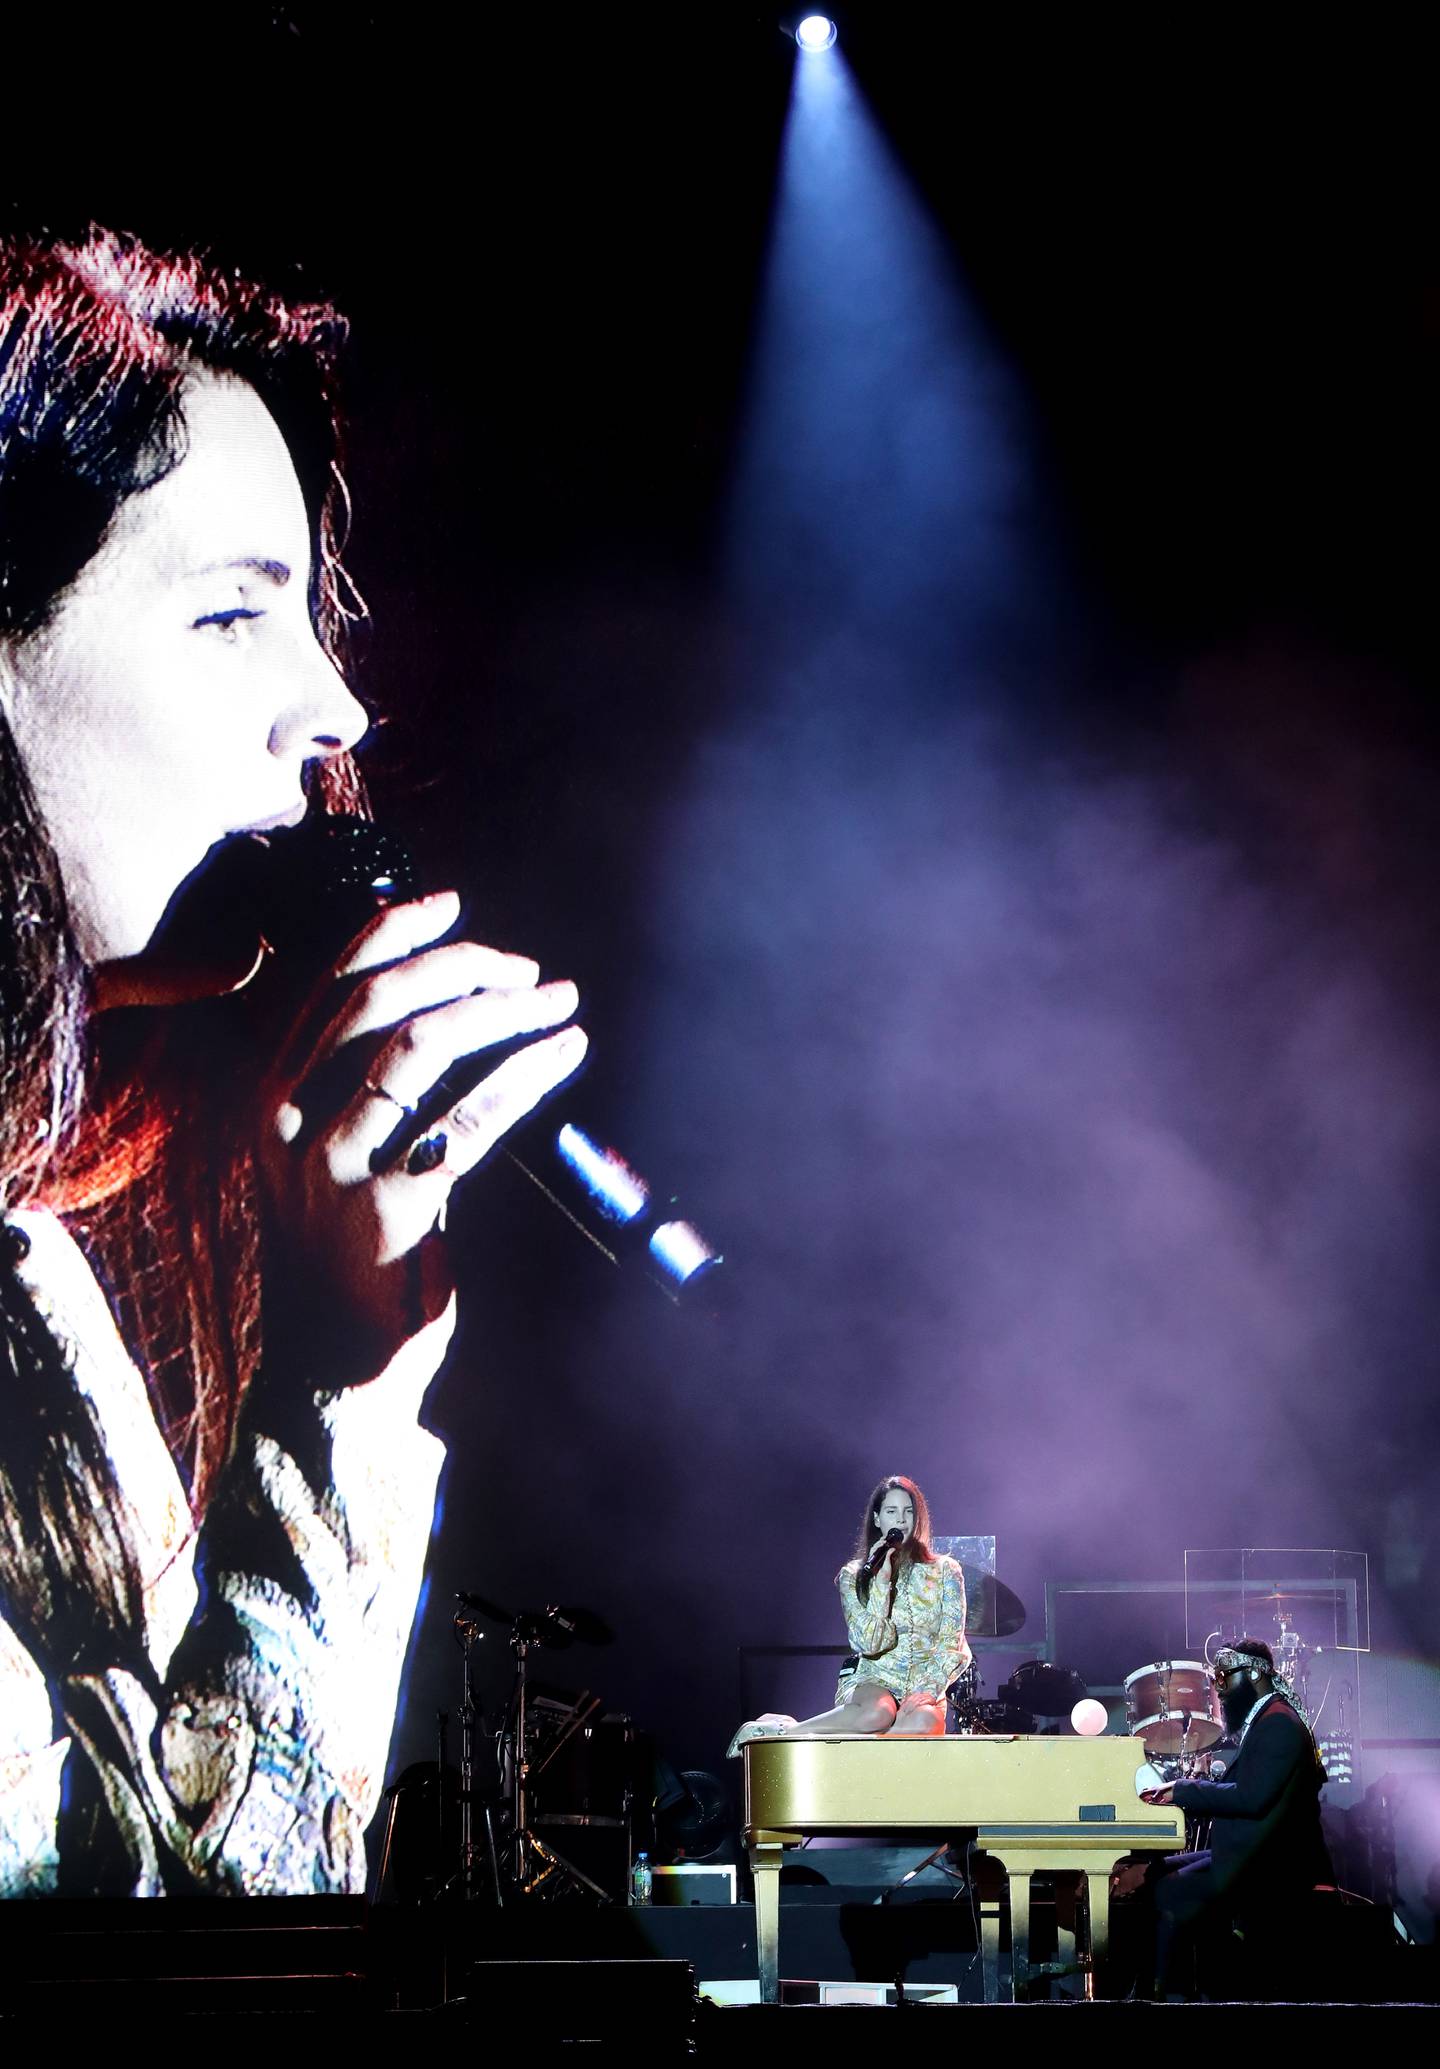 Abu Dhabi, United Arab Emirates - November 28th, 2019: Lana Del Rey performs at the F1 concert. Saturday, November 30th, 2019. Du Arena, Abu Dhabi. Chris Whiteoak / The National